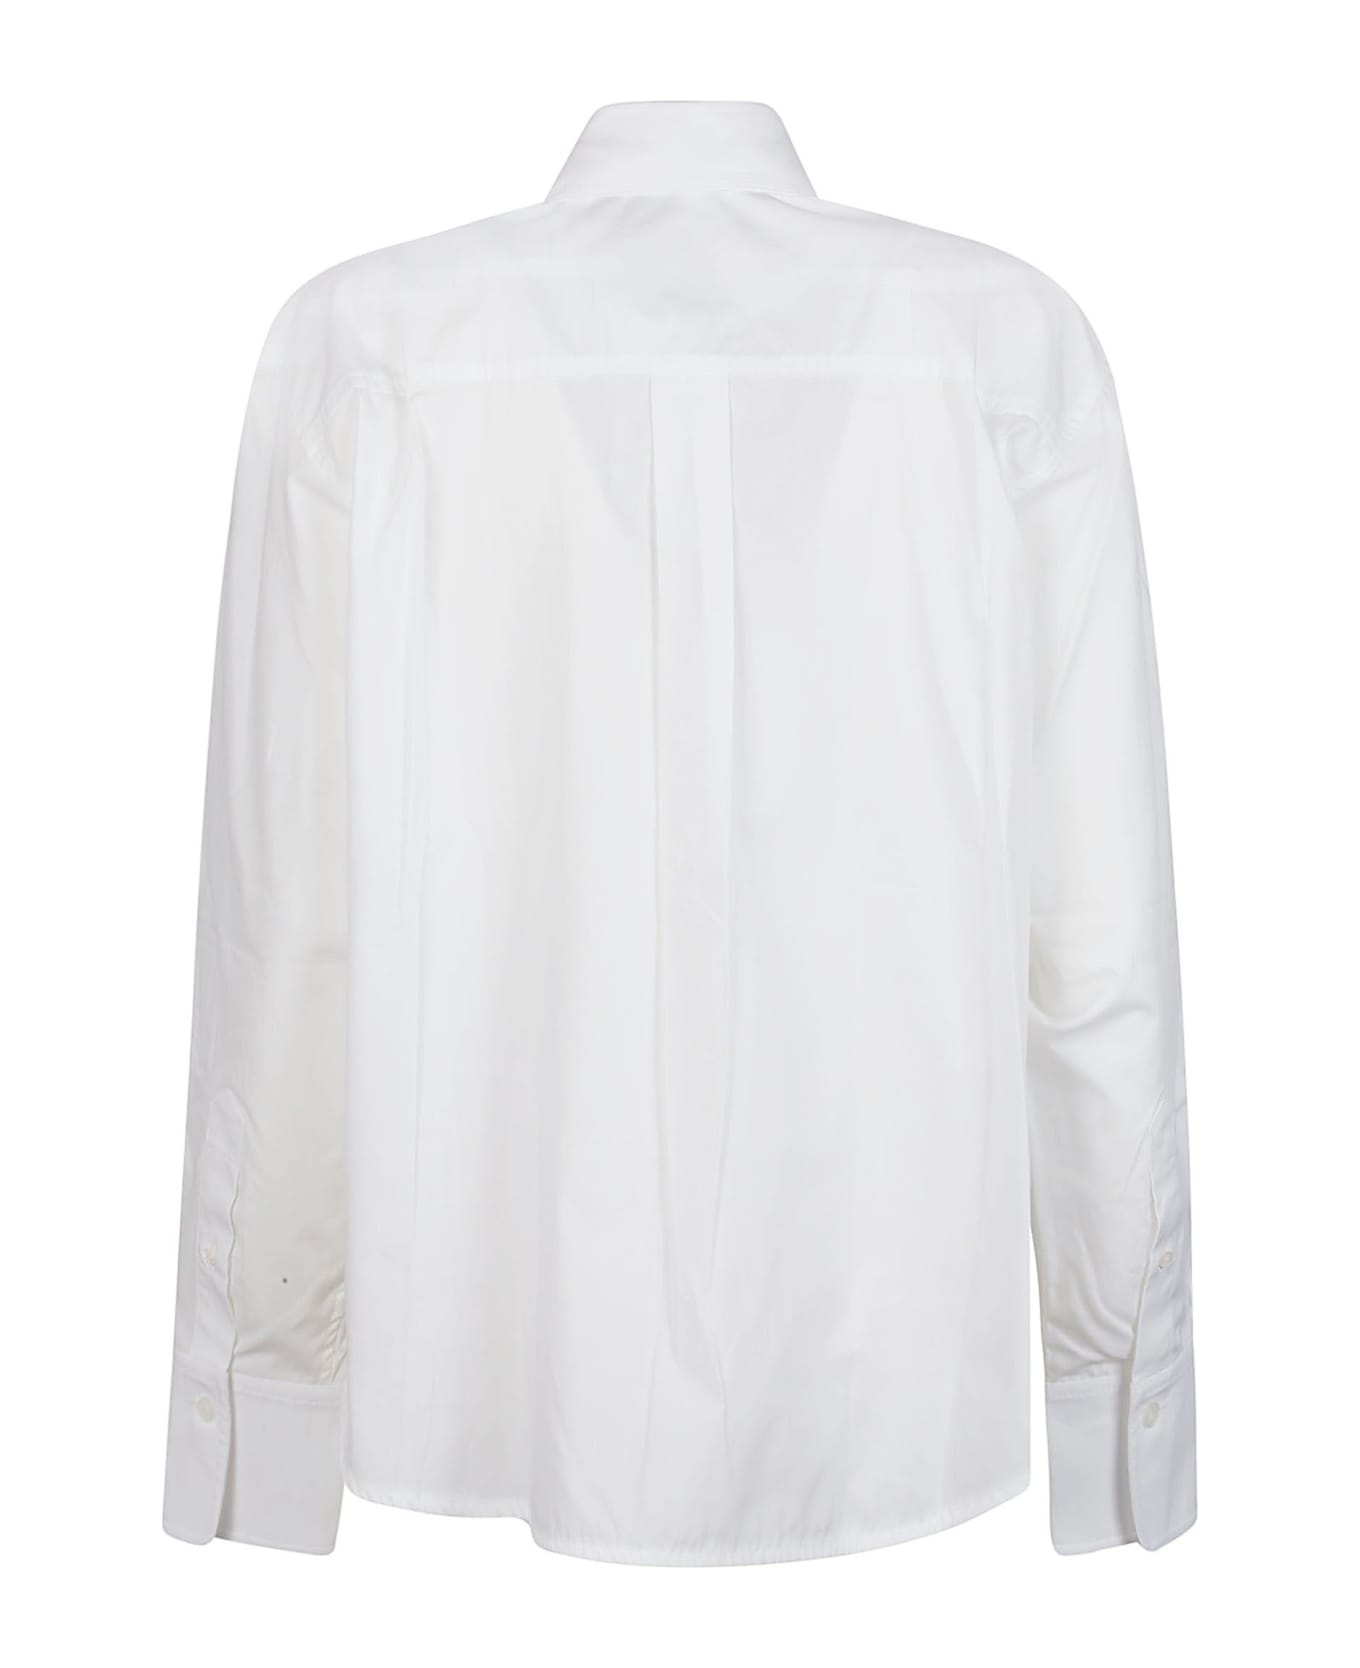 Victoria Beckham Cropped Long Sleeve Shirt - White シャツ